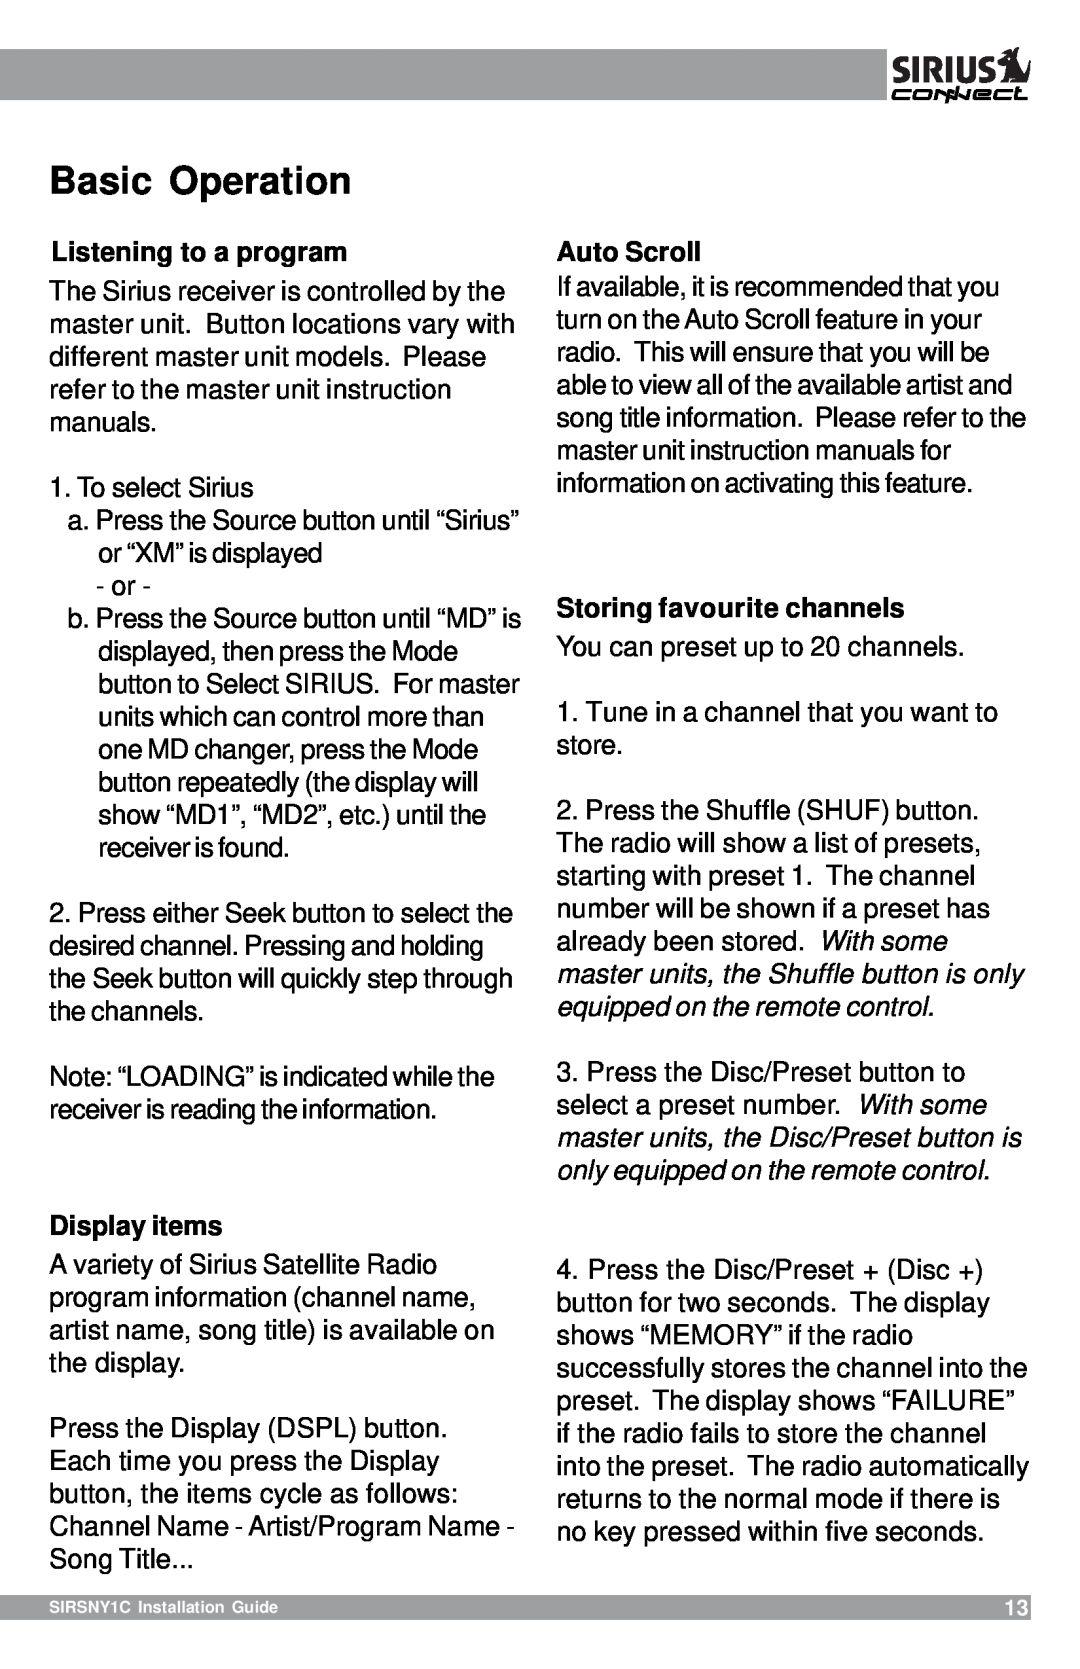 Sirius Satellite Radio SIRSNY1C manual Basic Operation, Listening to a program, Display items, Auto Scroll 